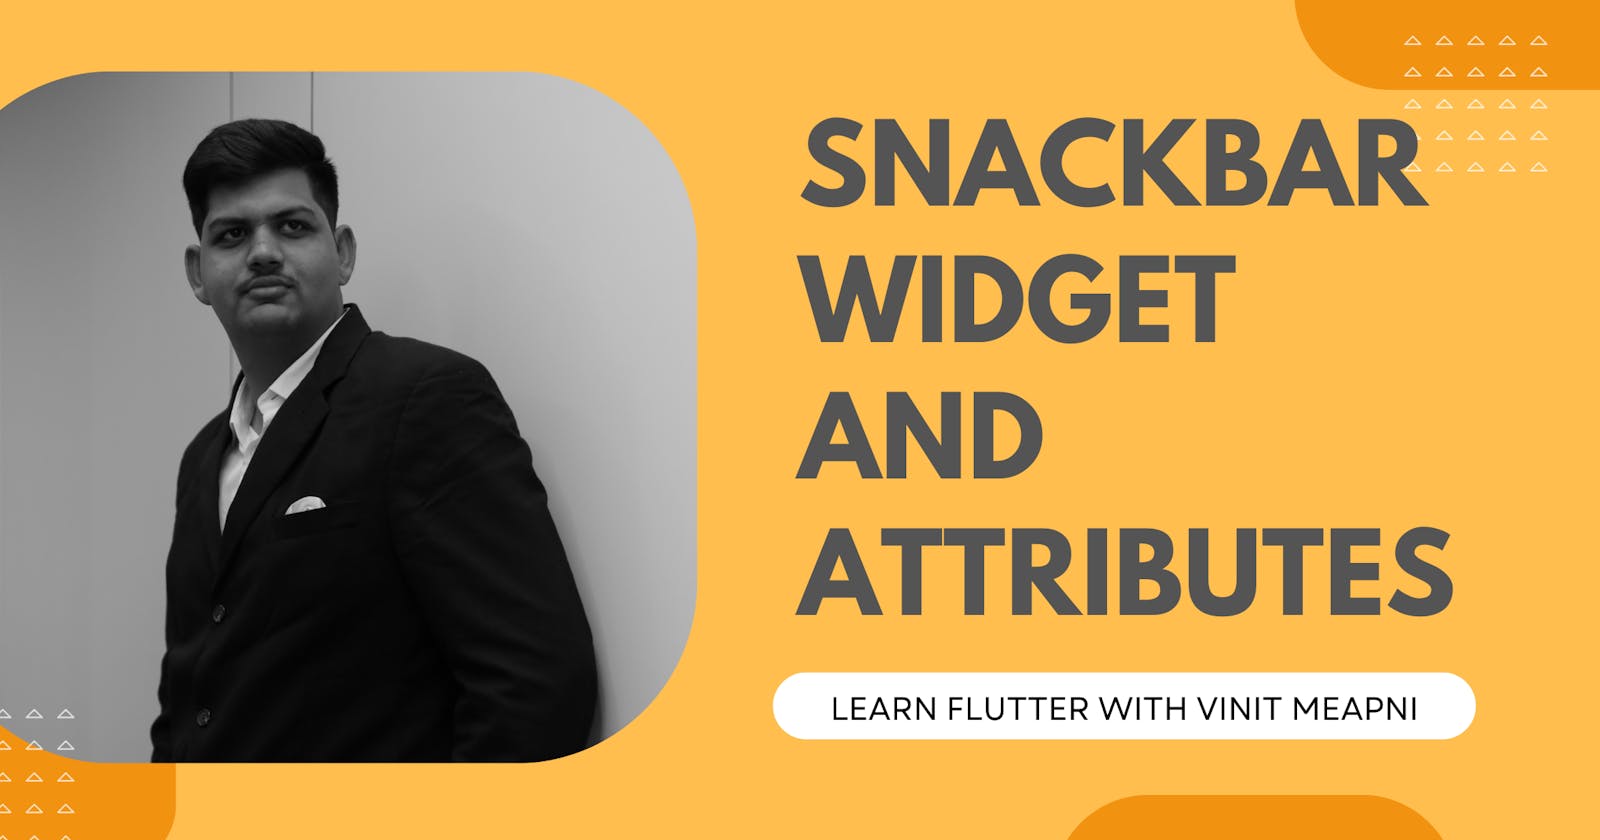 SnackbarWidget and Attributes